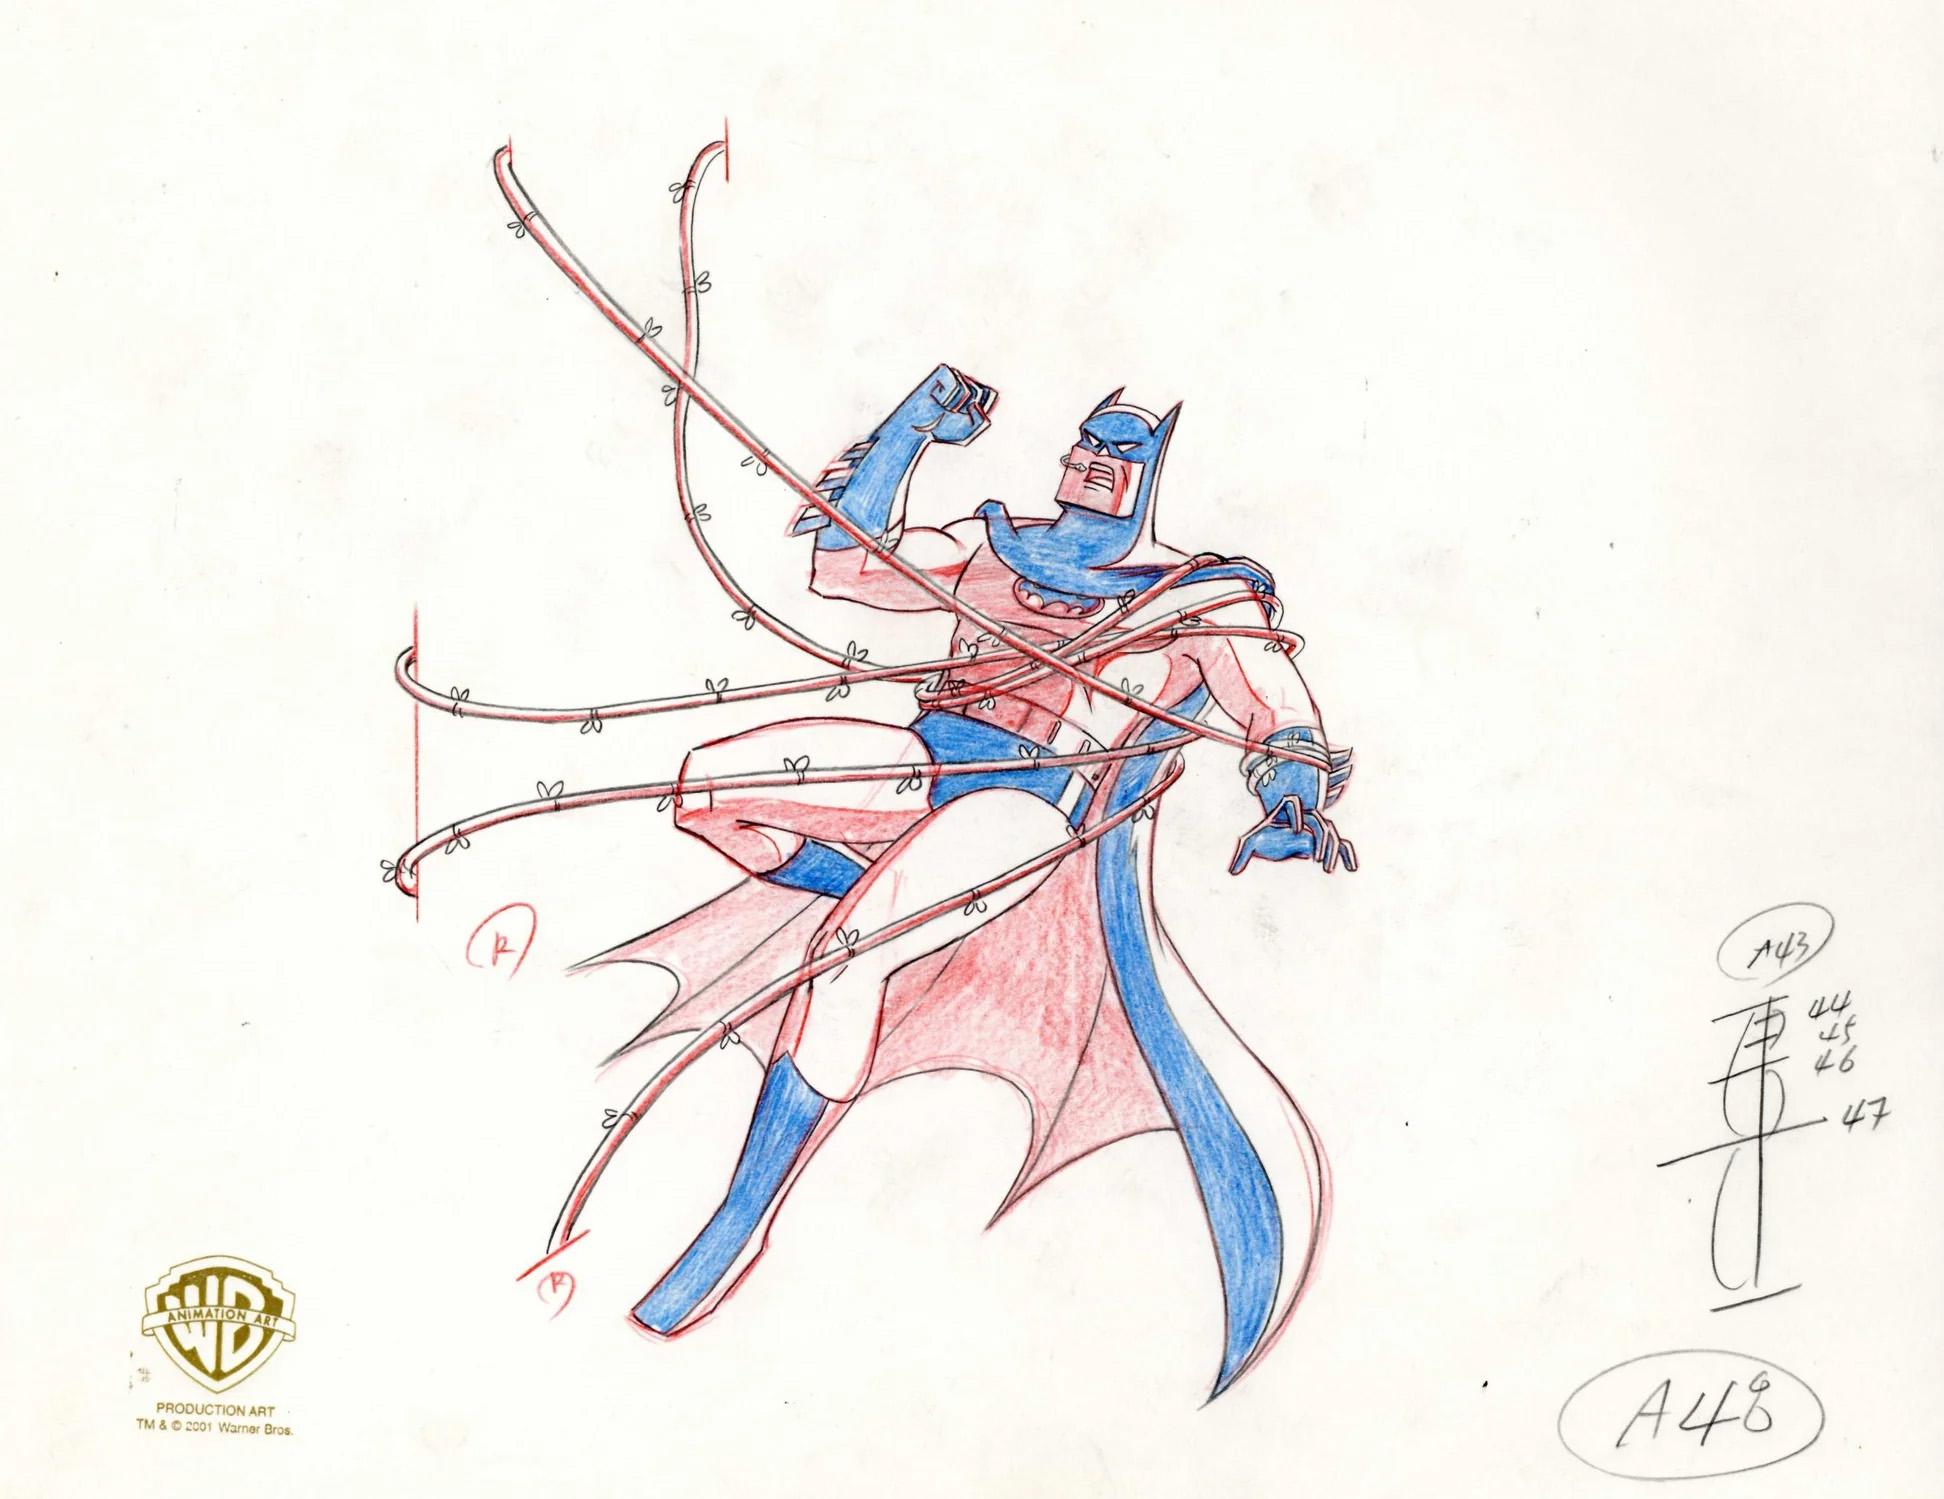 Batman The Animated Series Original Production Drawing: Batman - Art by DC Comics Studio Artists